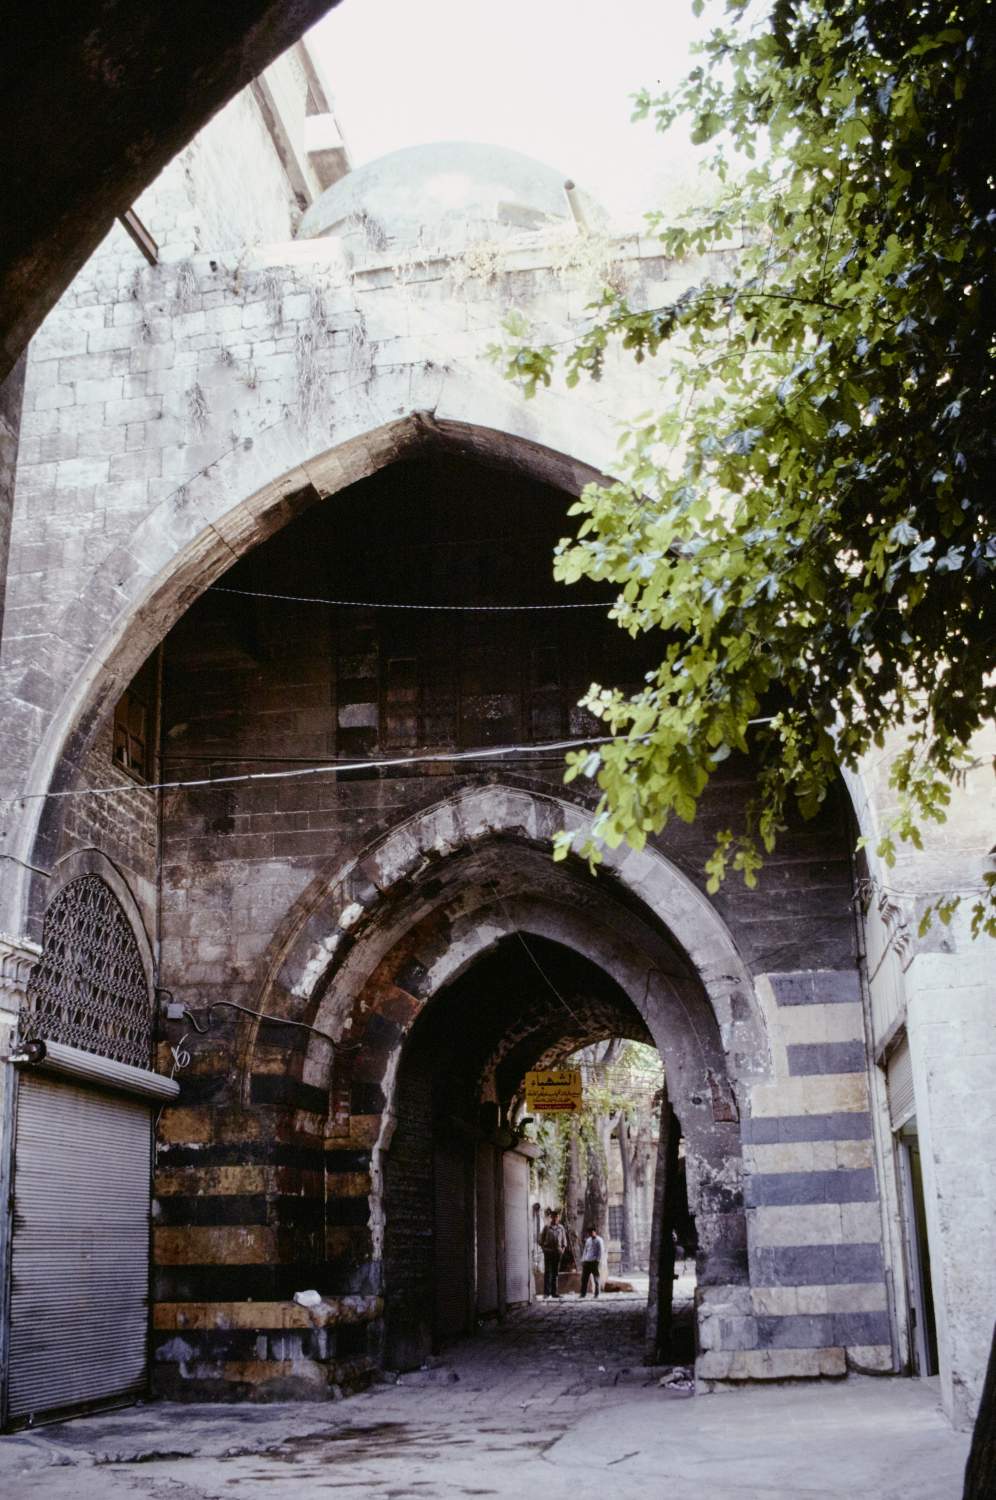 View of portal.